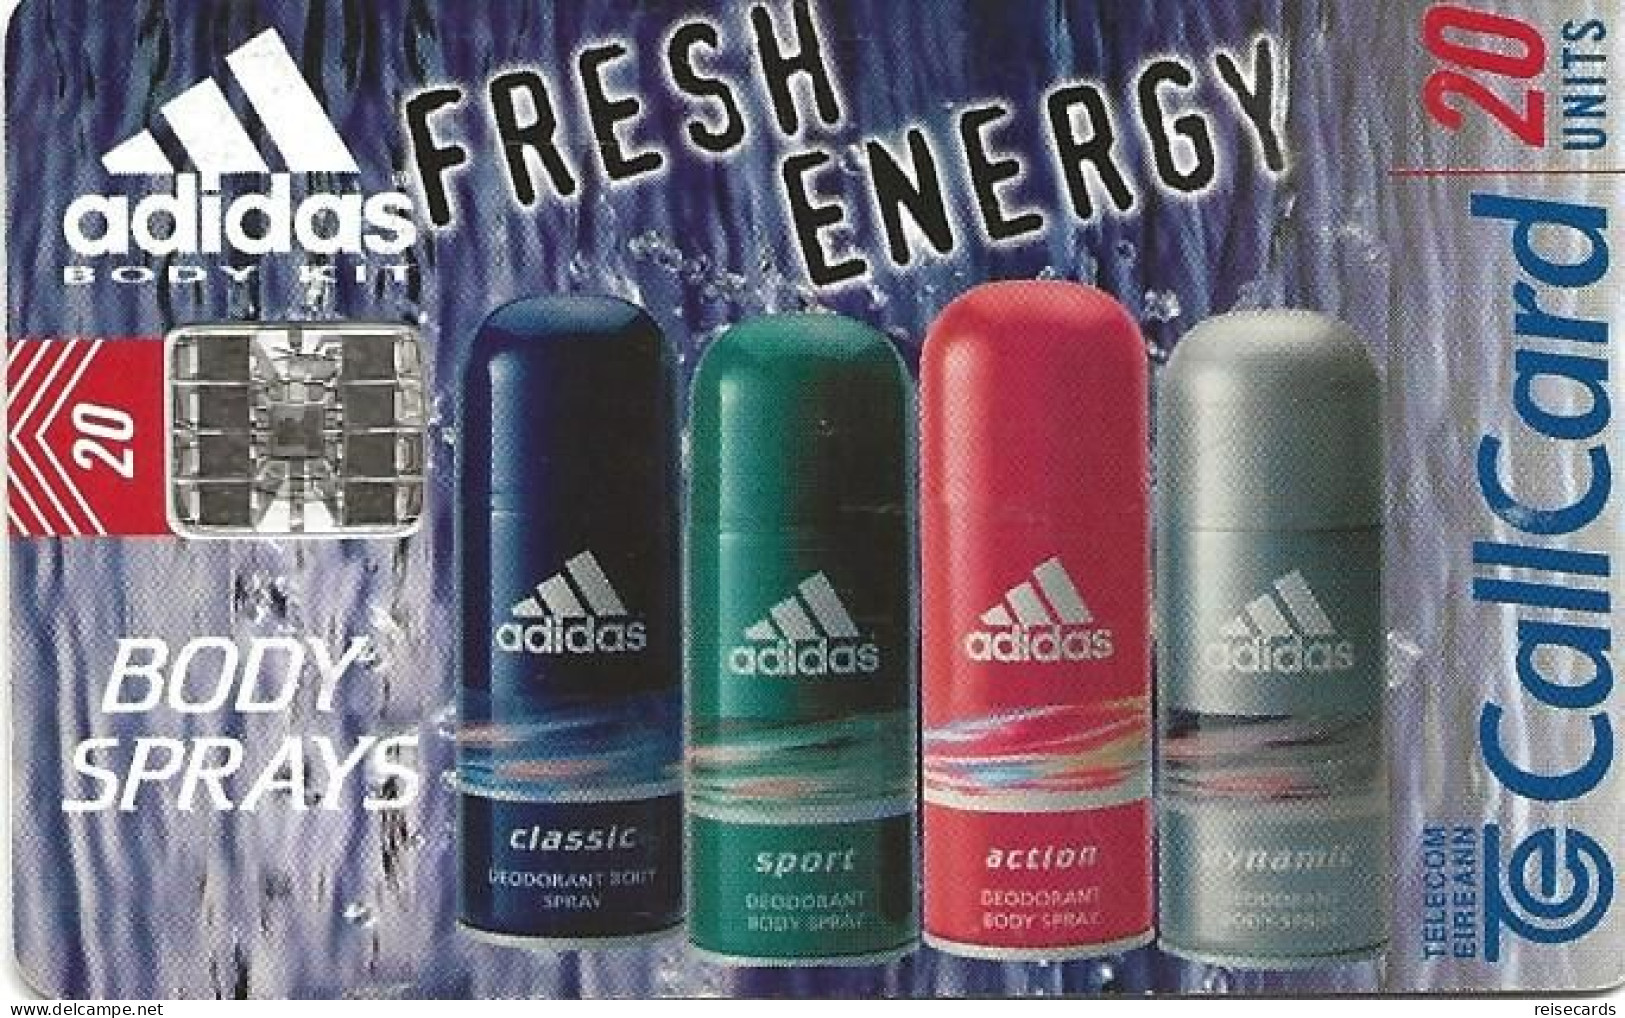 Ireland: Telecom Eireann - 1998 Adidas Body Sprays - Irland